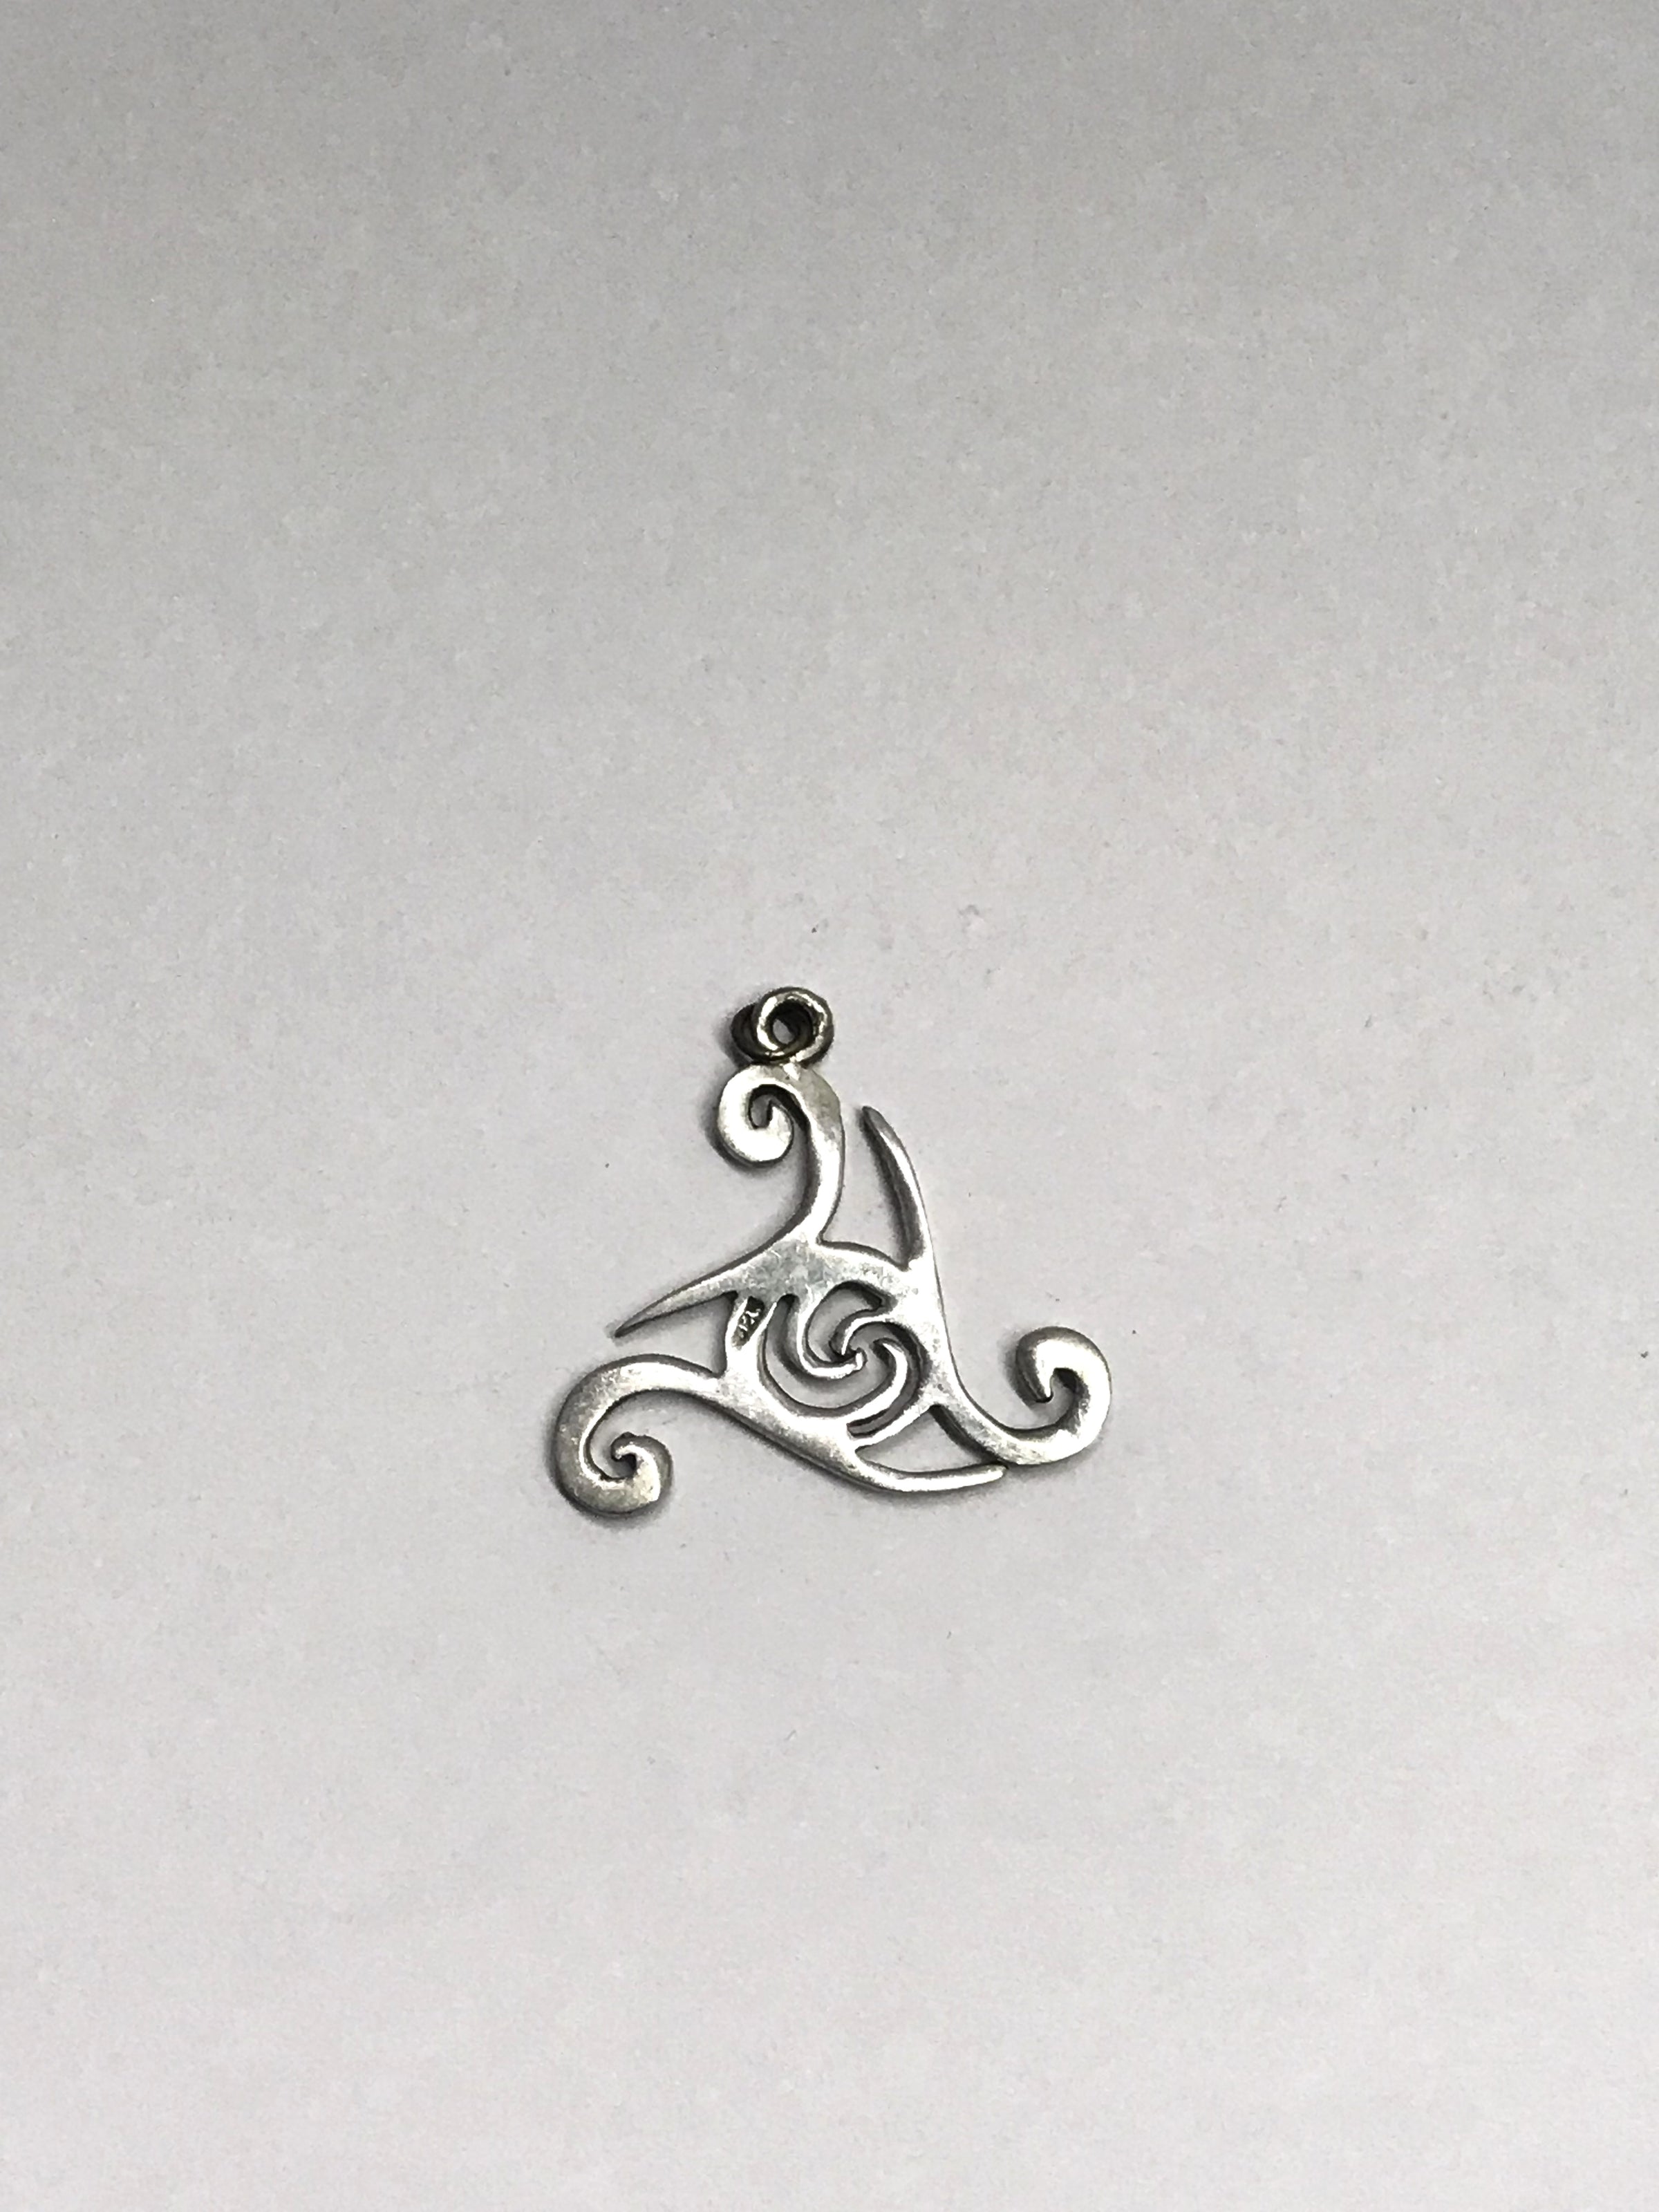 Ceilidh's Celtic Knot Sterling Silver Necklace Pendant